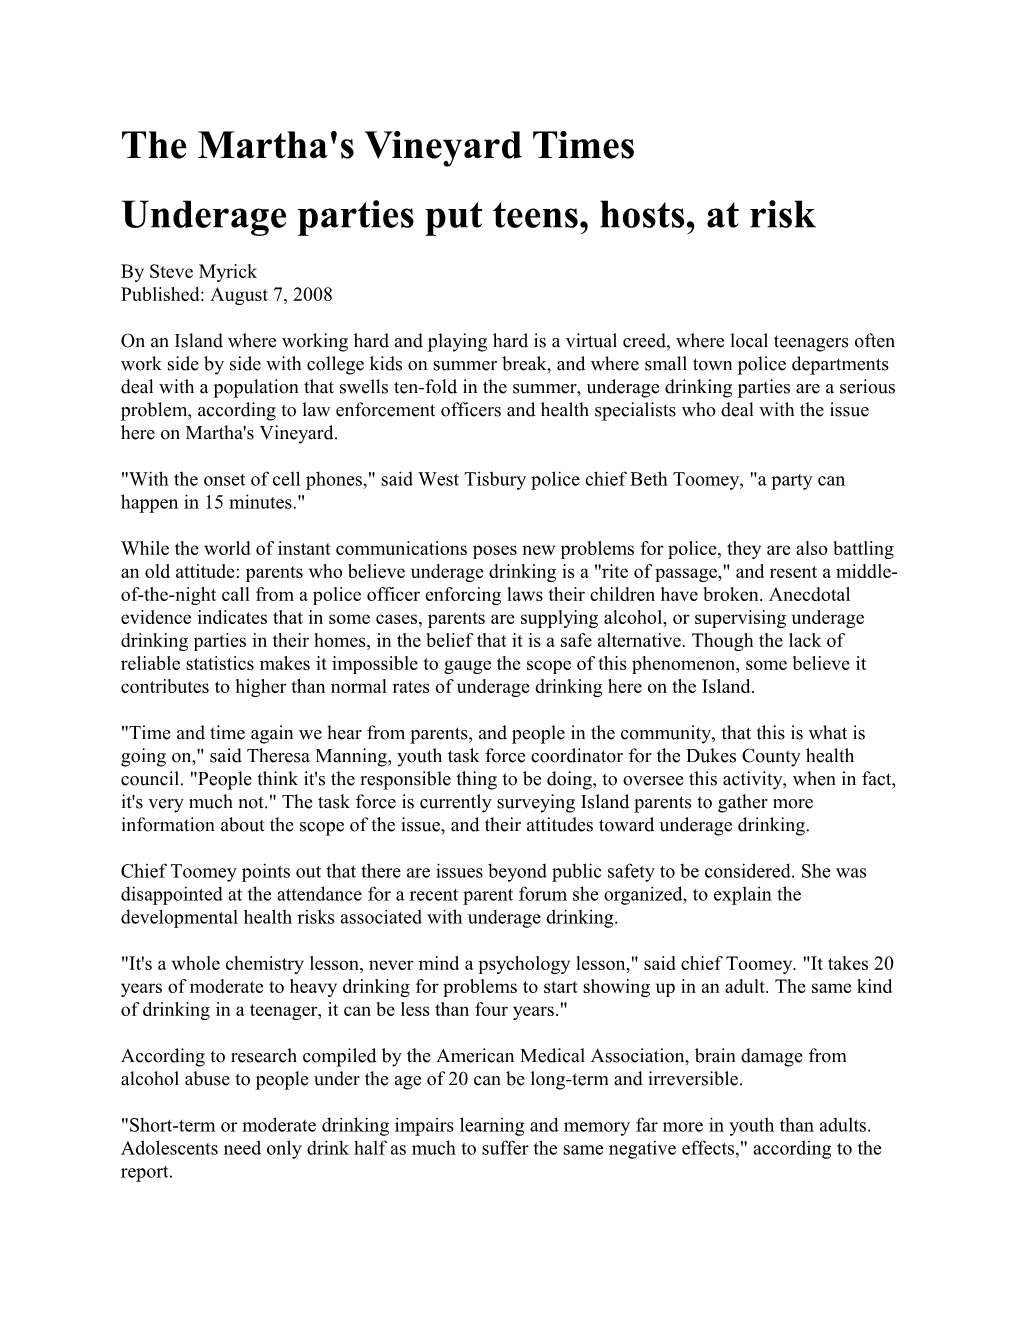 Underage Parties Put Teens, Hosts, at Risk